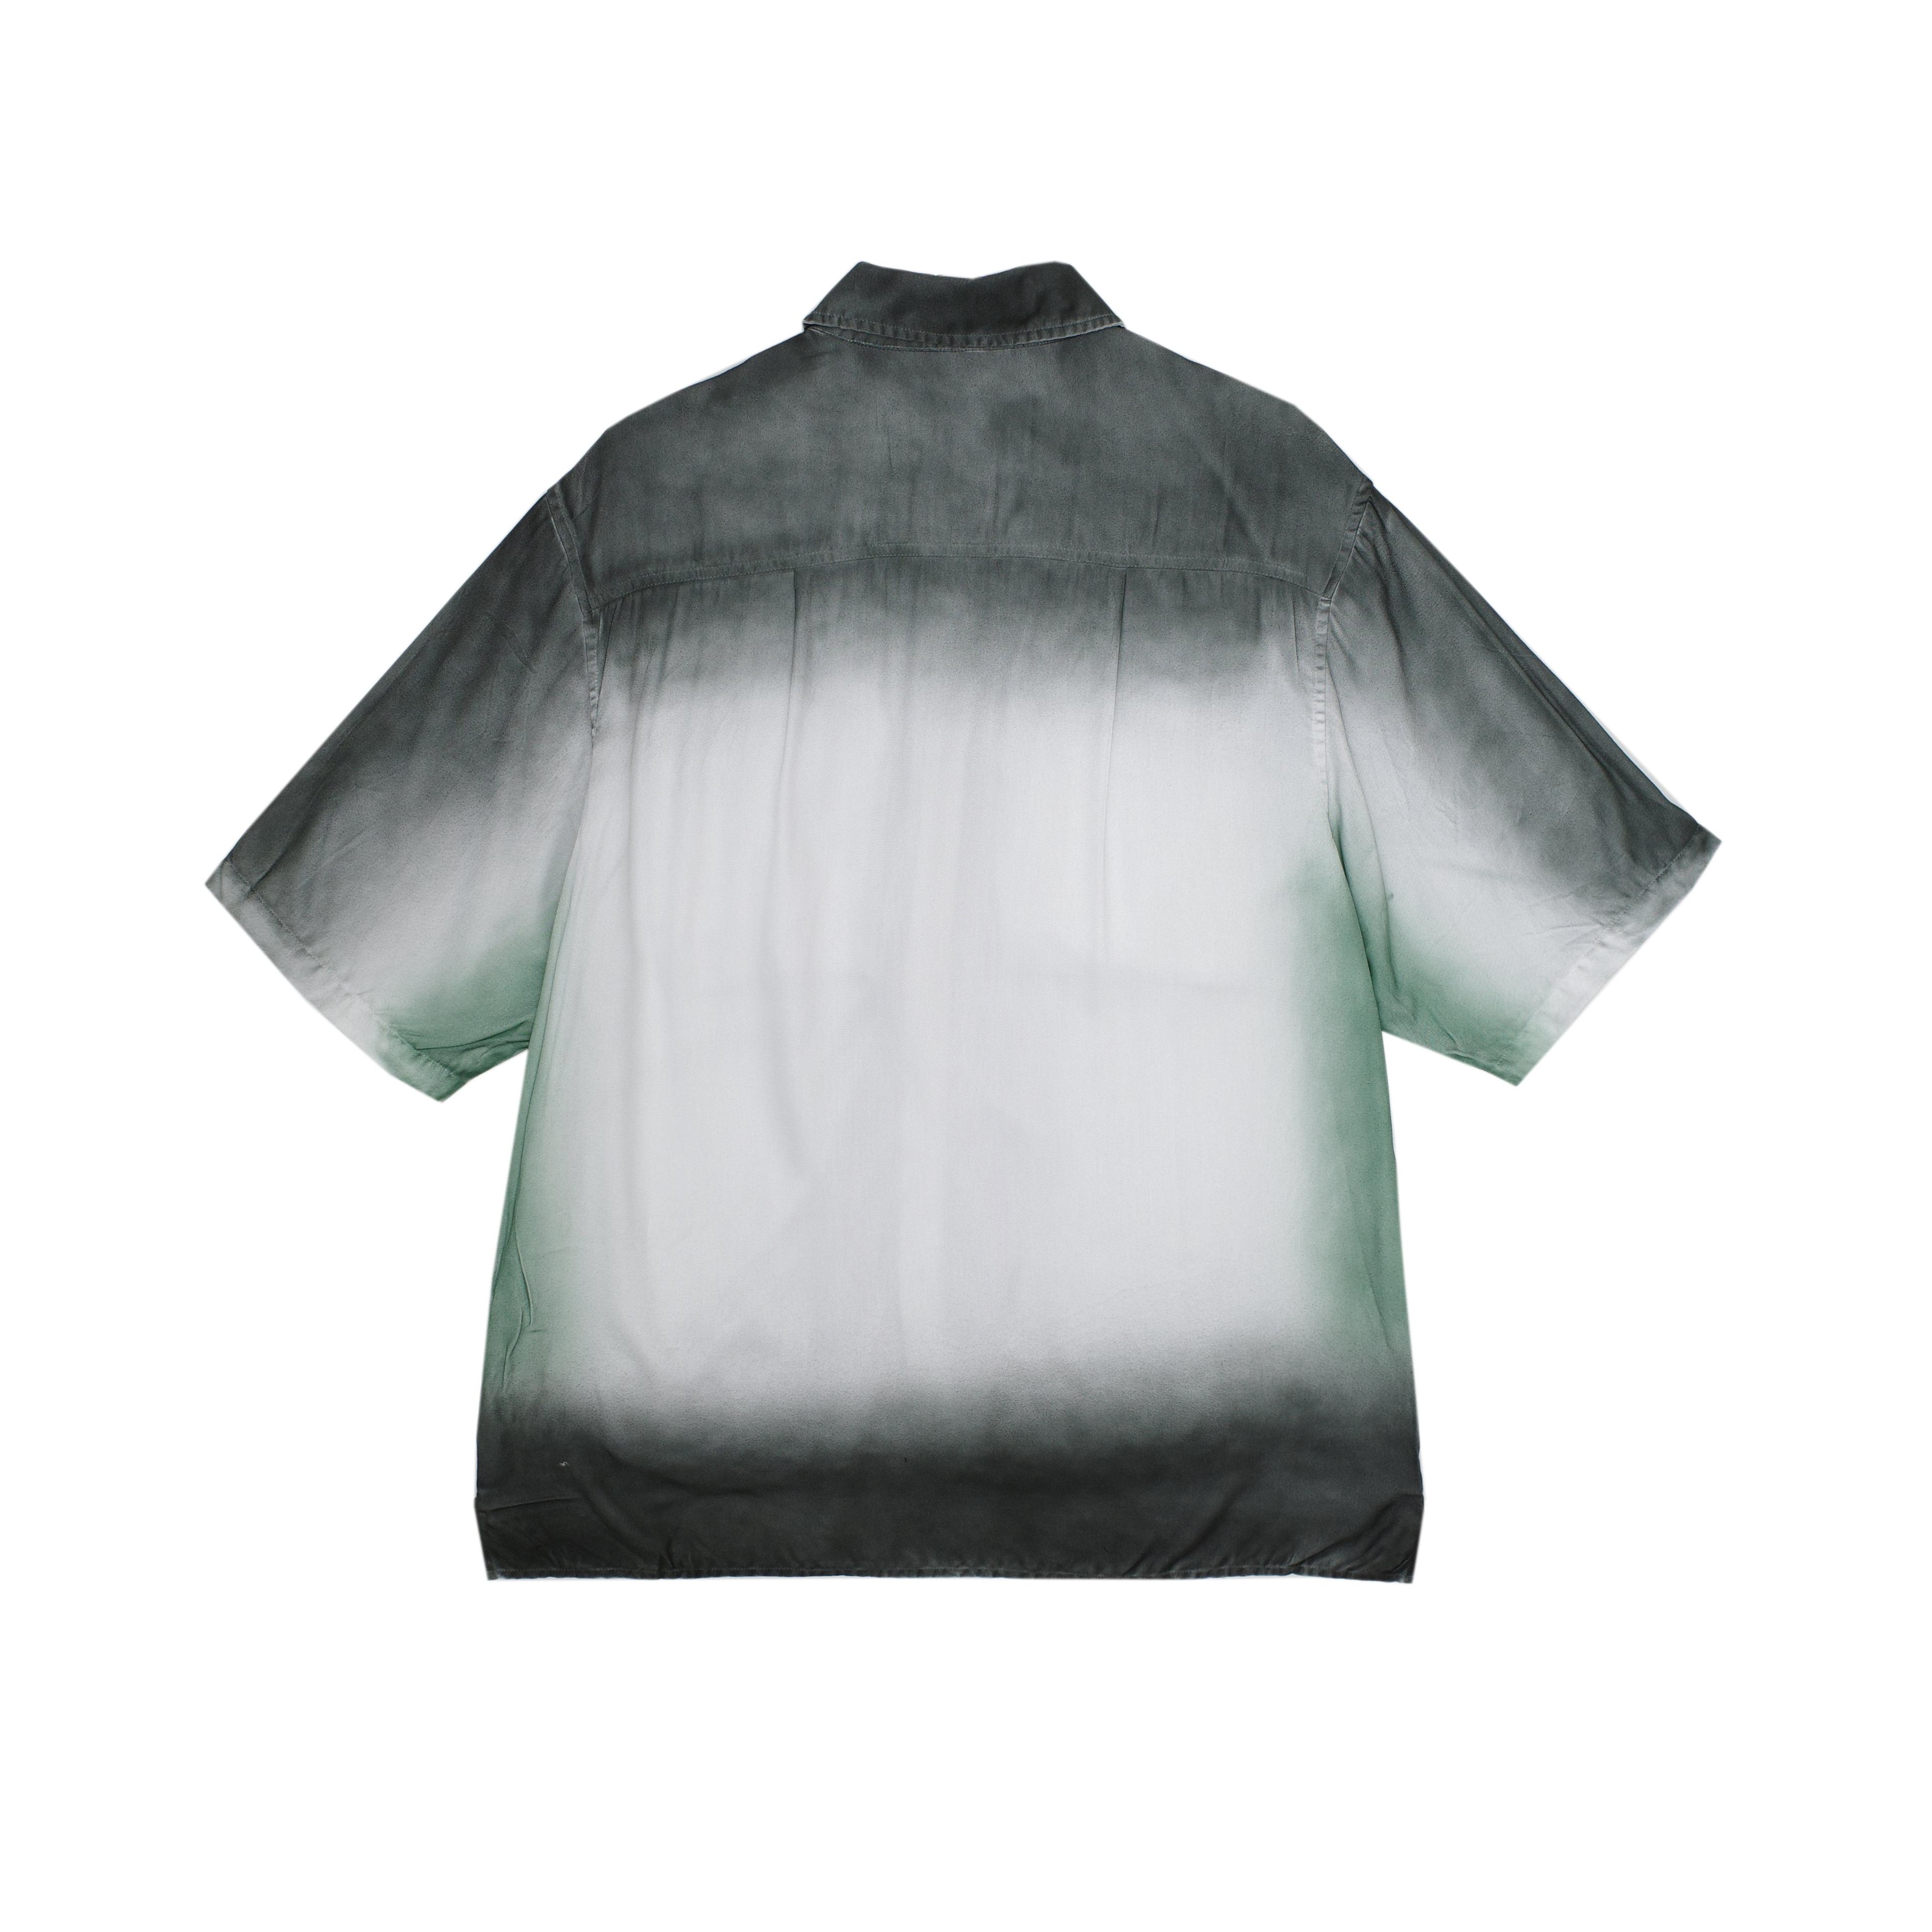 Alternate View 2 of Spray Dye Button Up Shirt